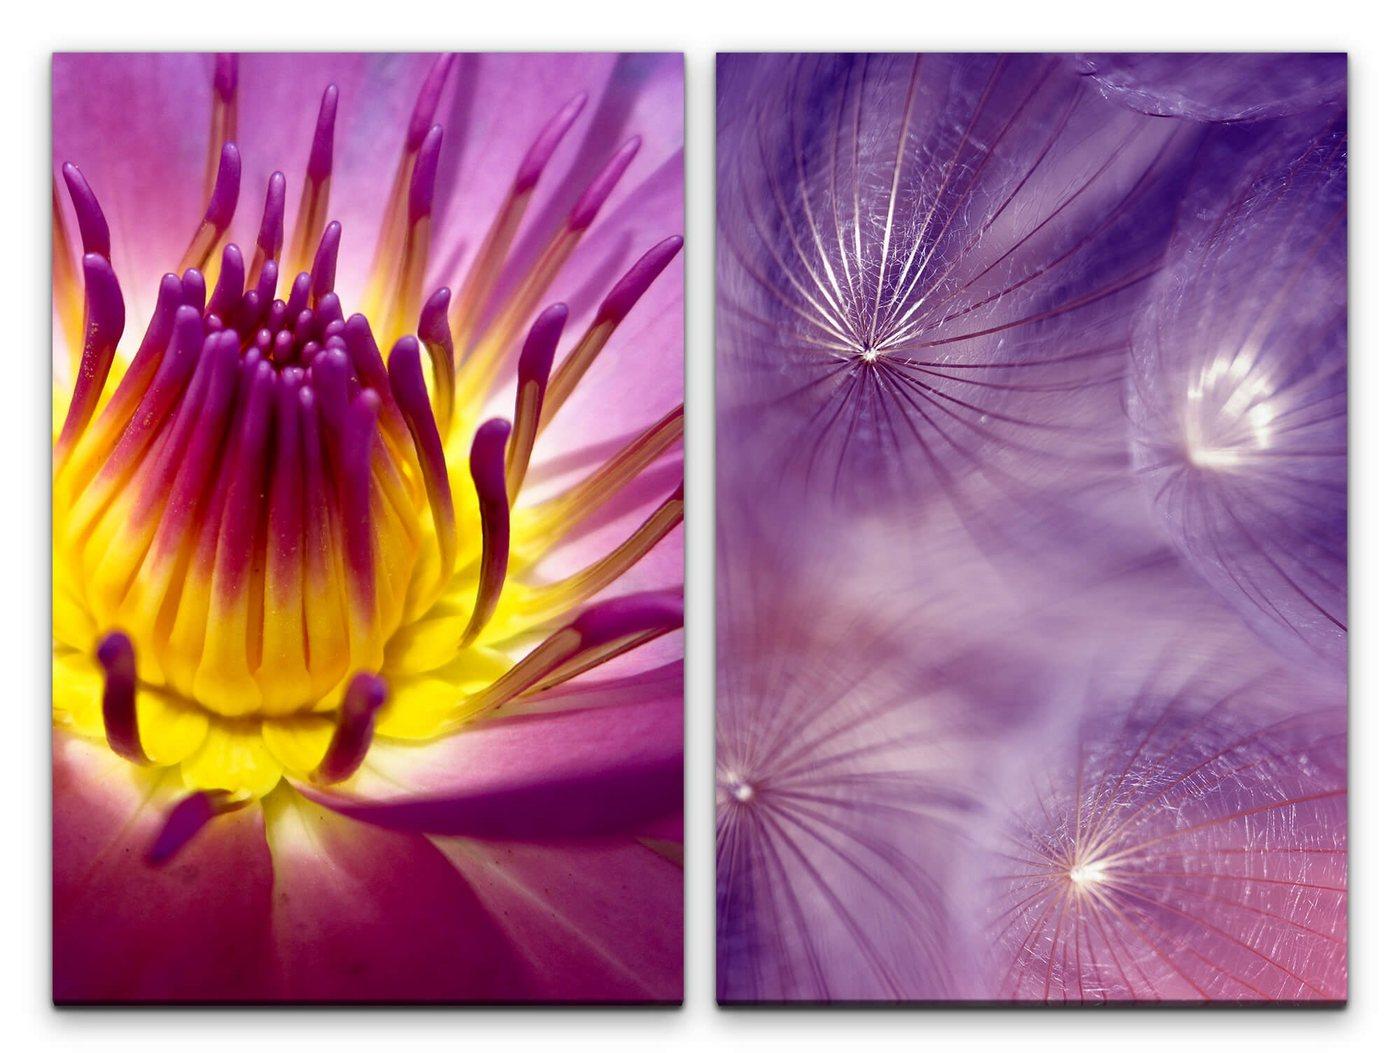 Sinus Art Leinwandbild 2 Bilder je 60x90cm Neonlicht Pusteblume Blüte Farbenfroh Fotokunst Violett Makroaufnahmen